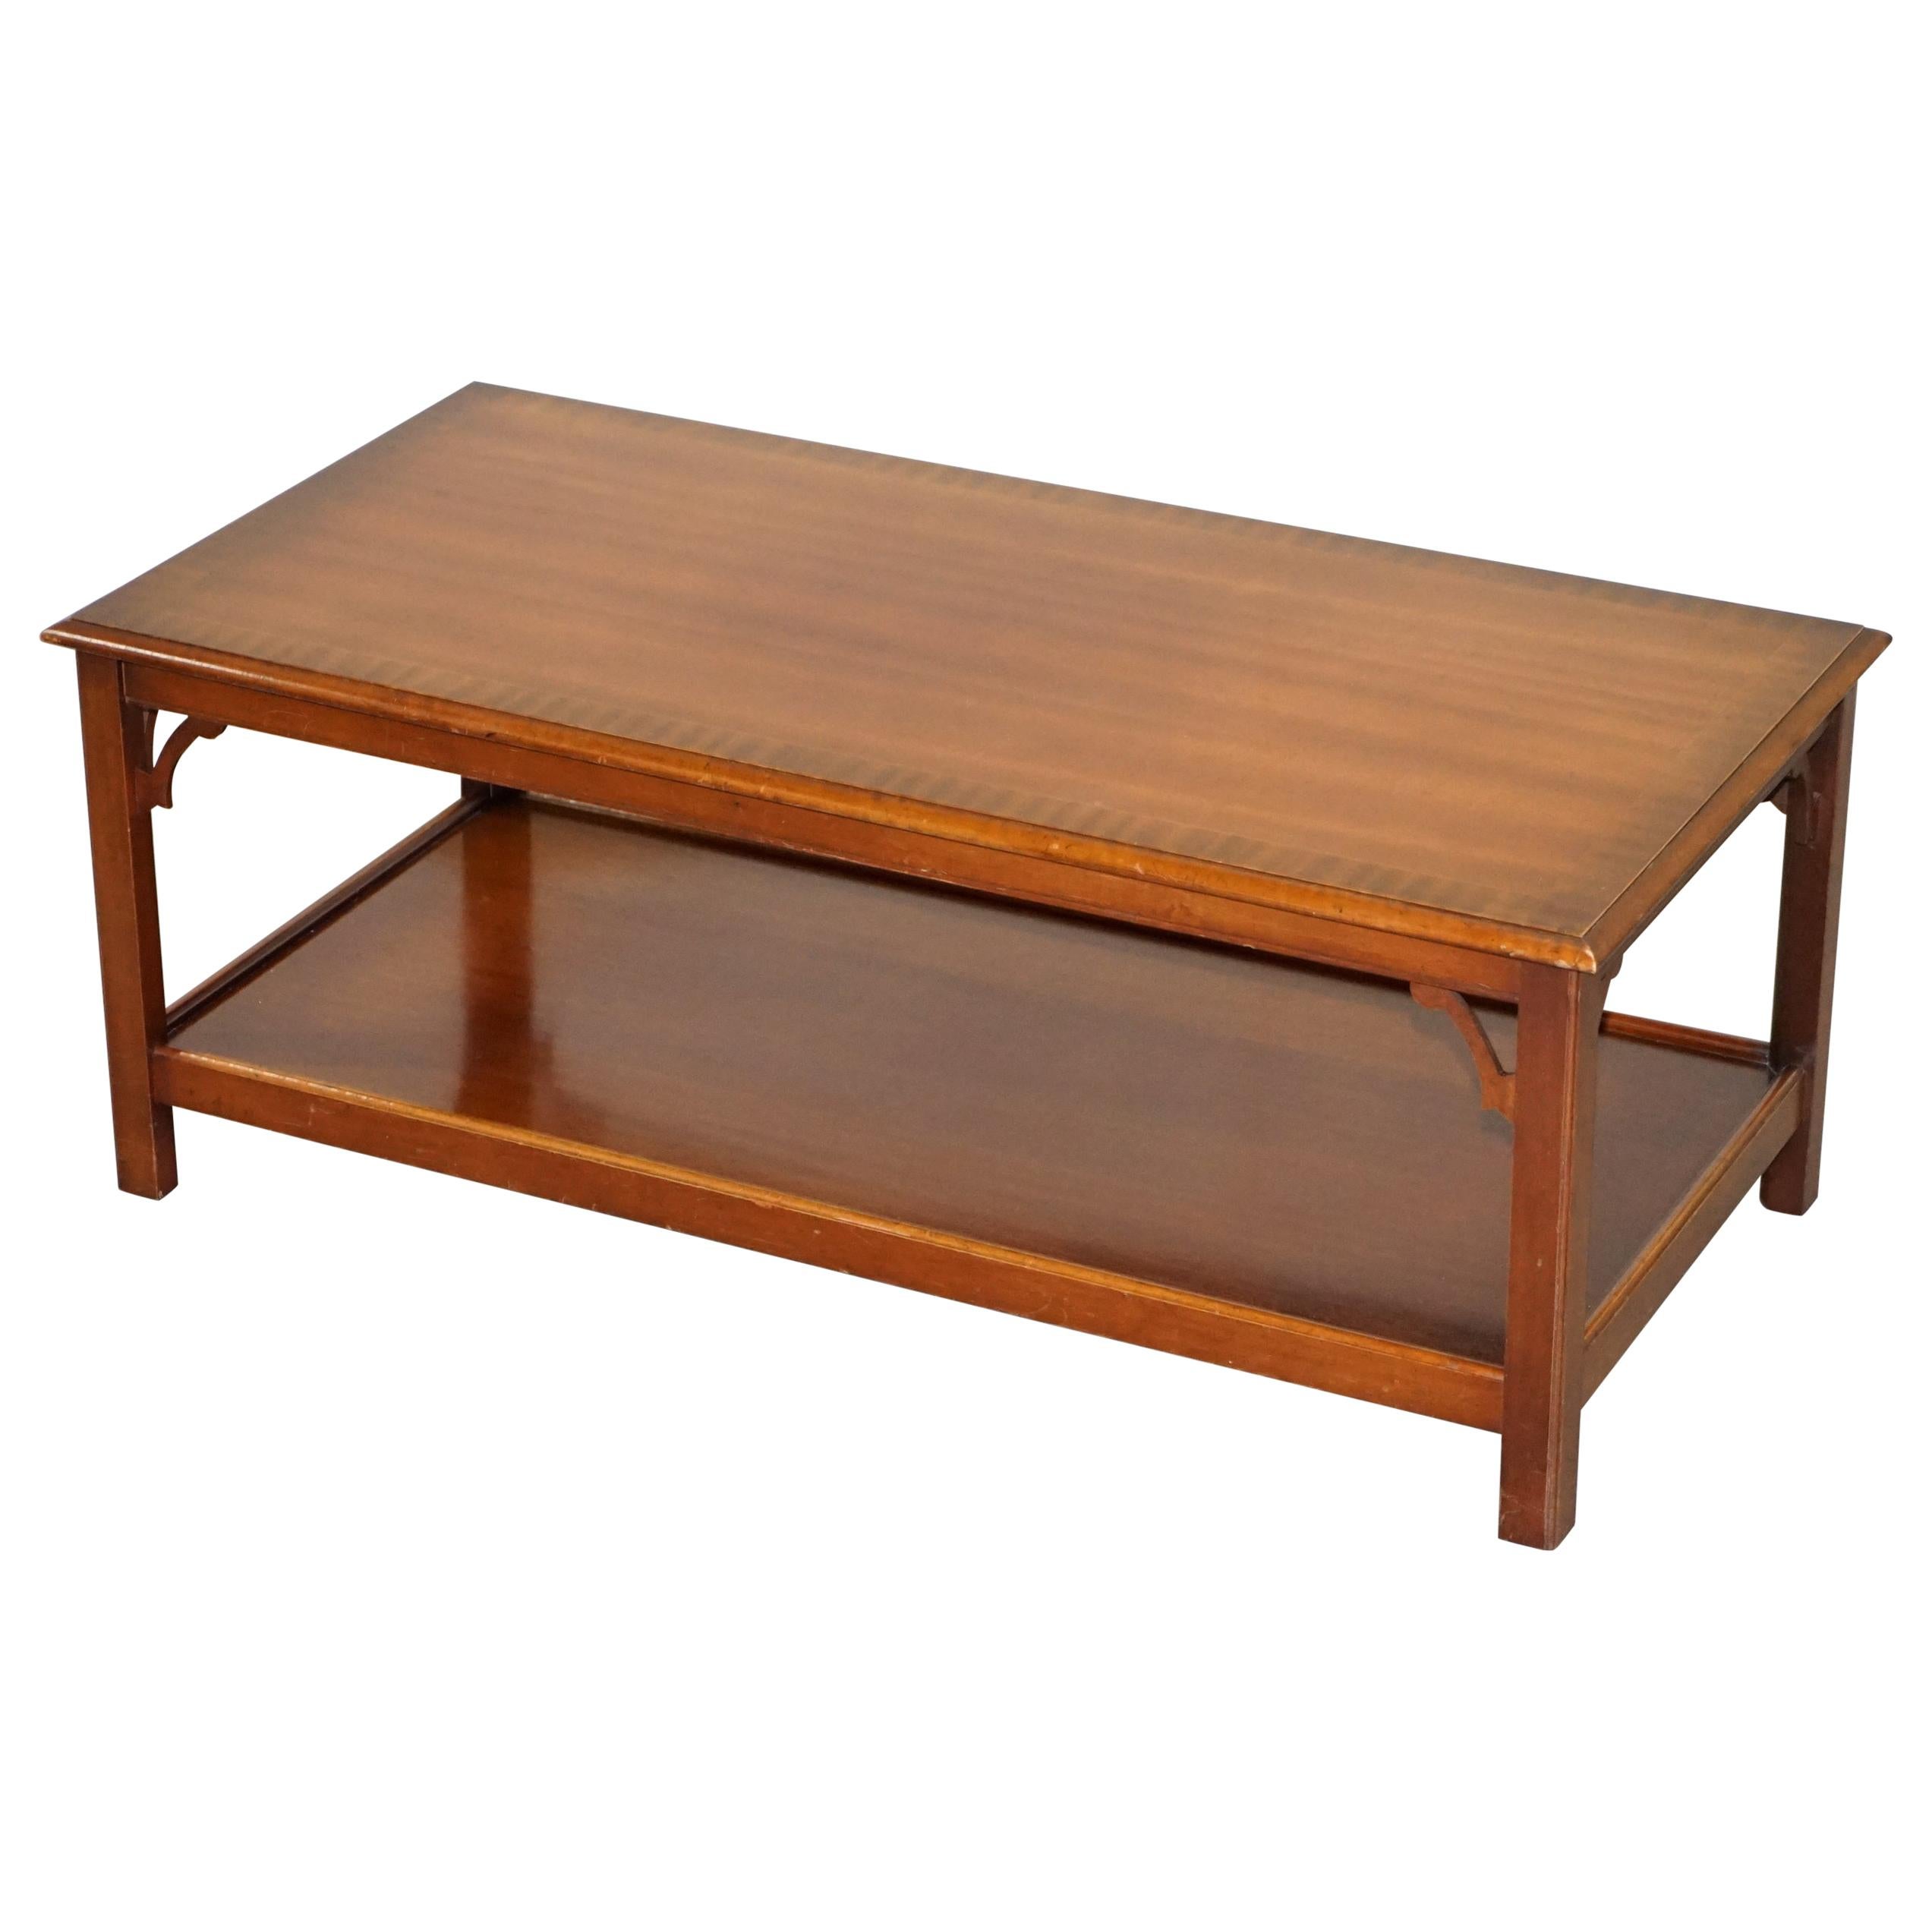 Lovely Vintage Flamed Hardwood Bradley Furniture Long Coffee Table Nice Design